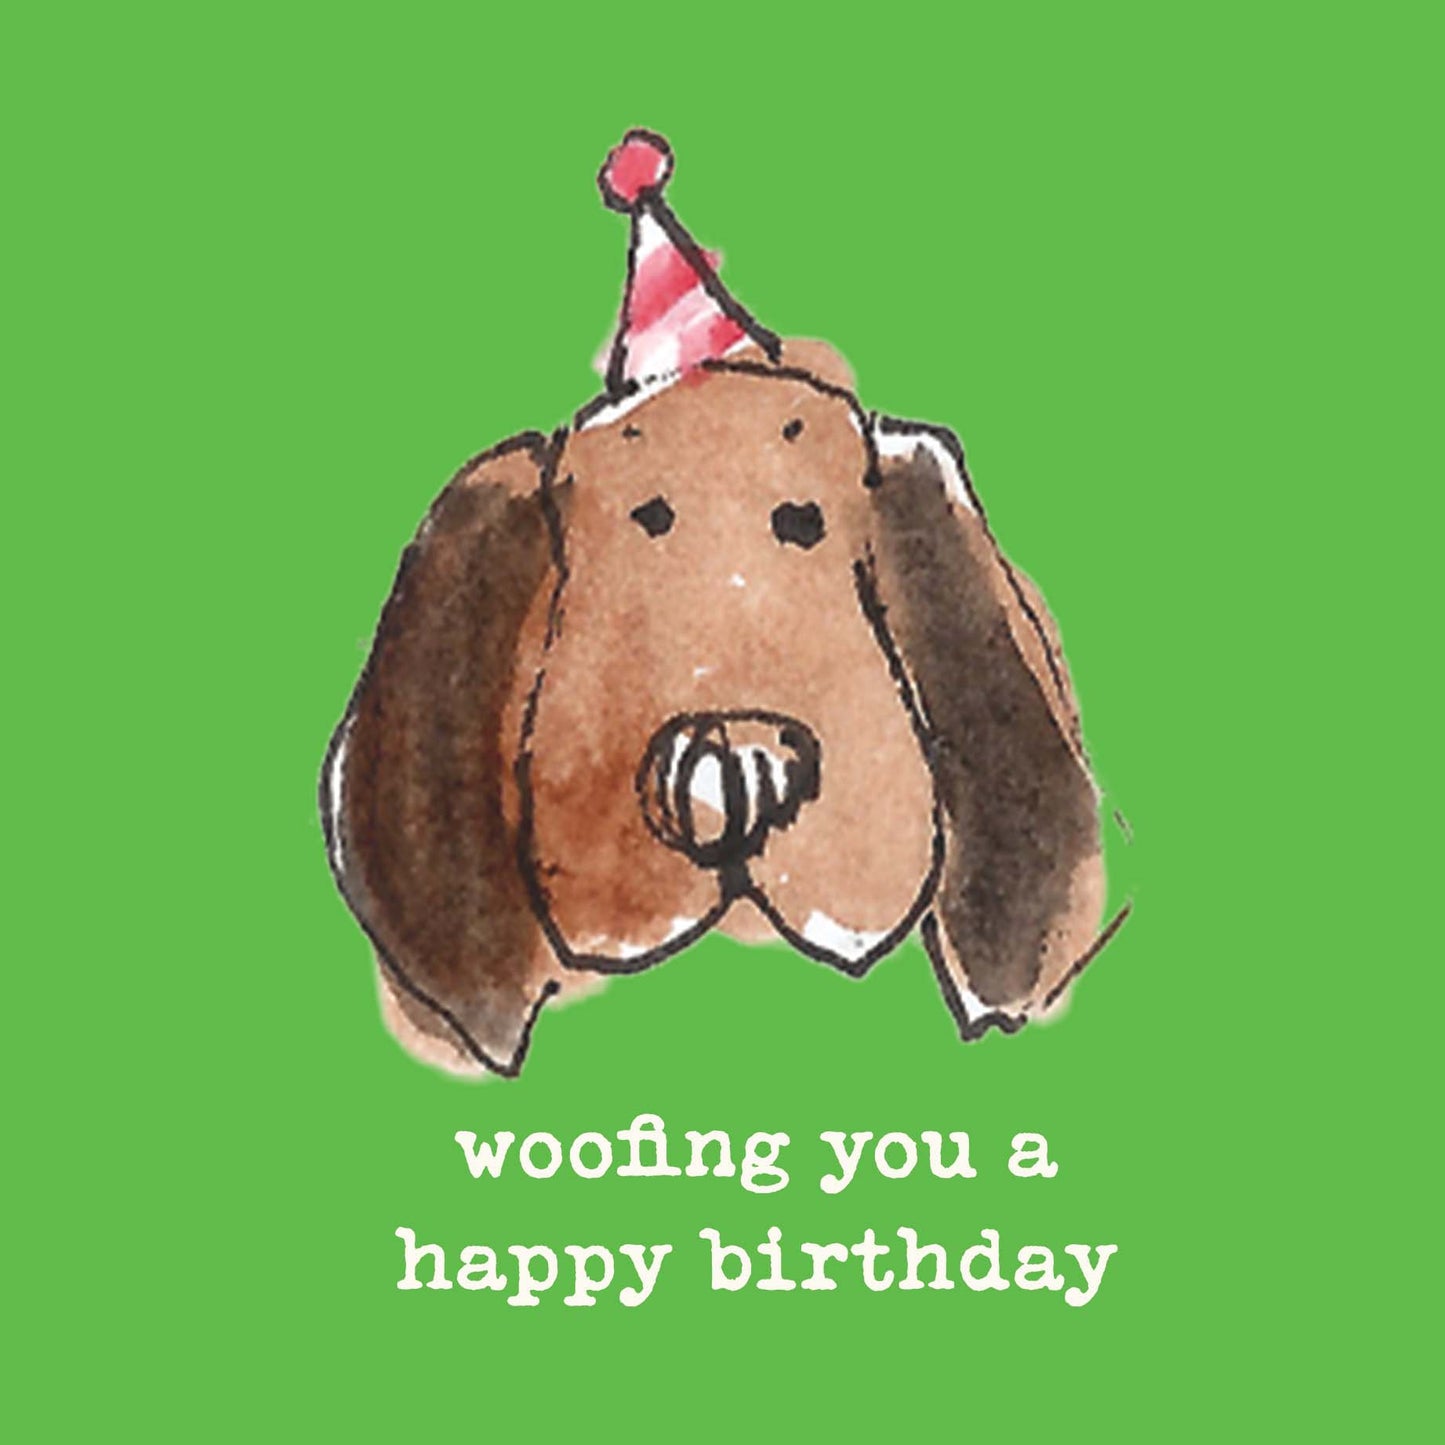 Poet and Painter - ‘Woofing happy birthday’ Greetings Card, FP3285